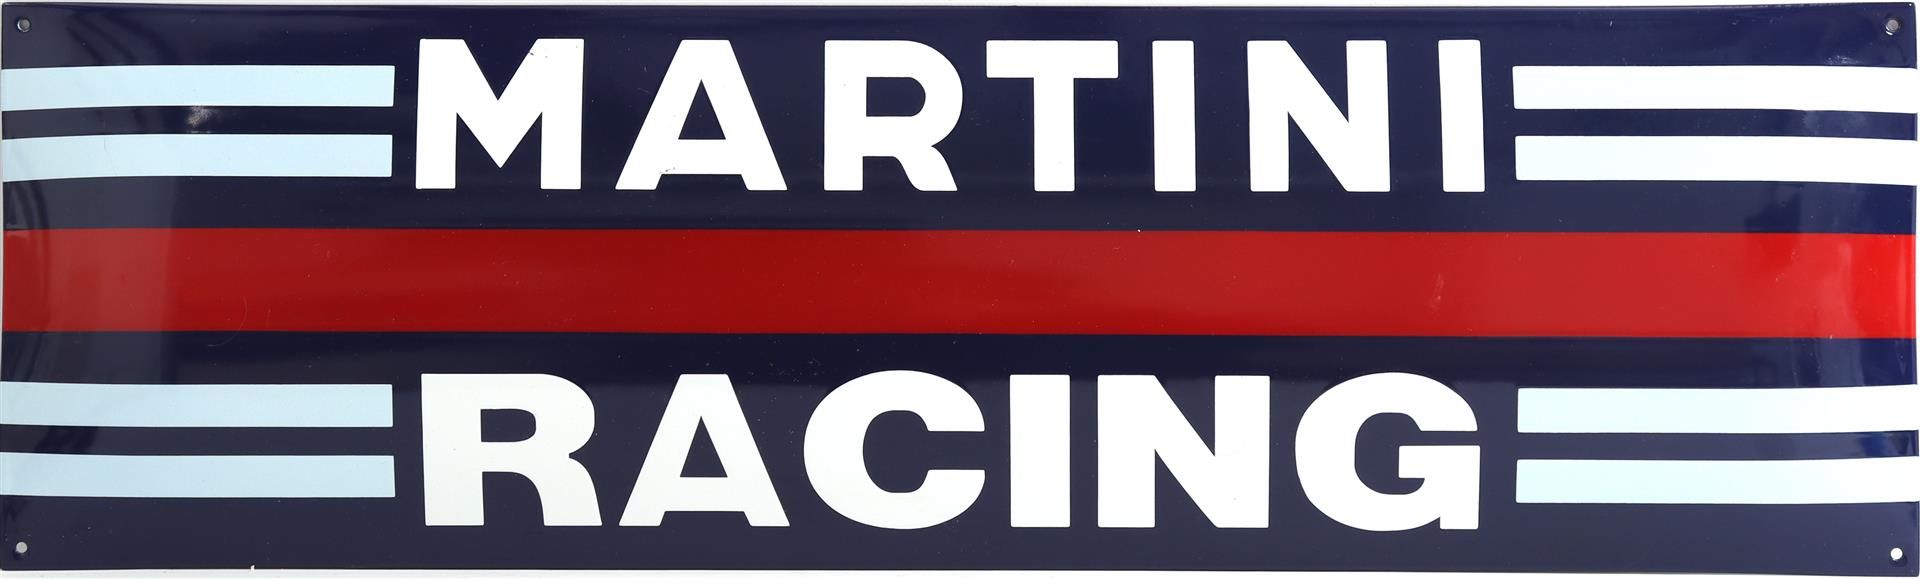 Advertising sign Martini Racing